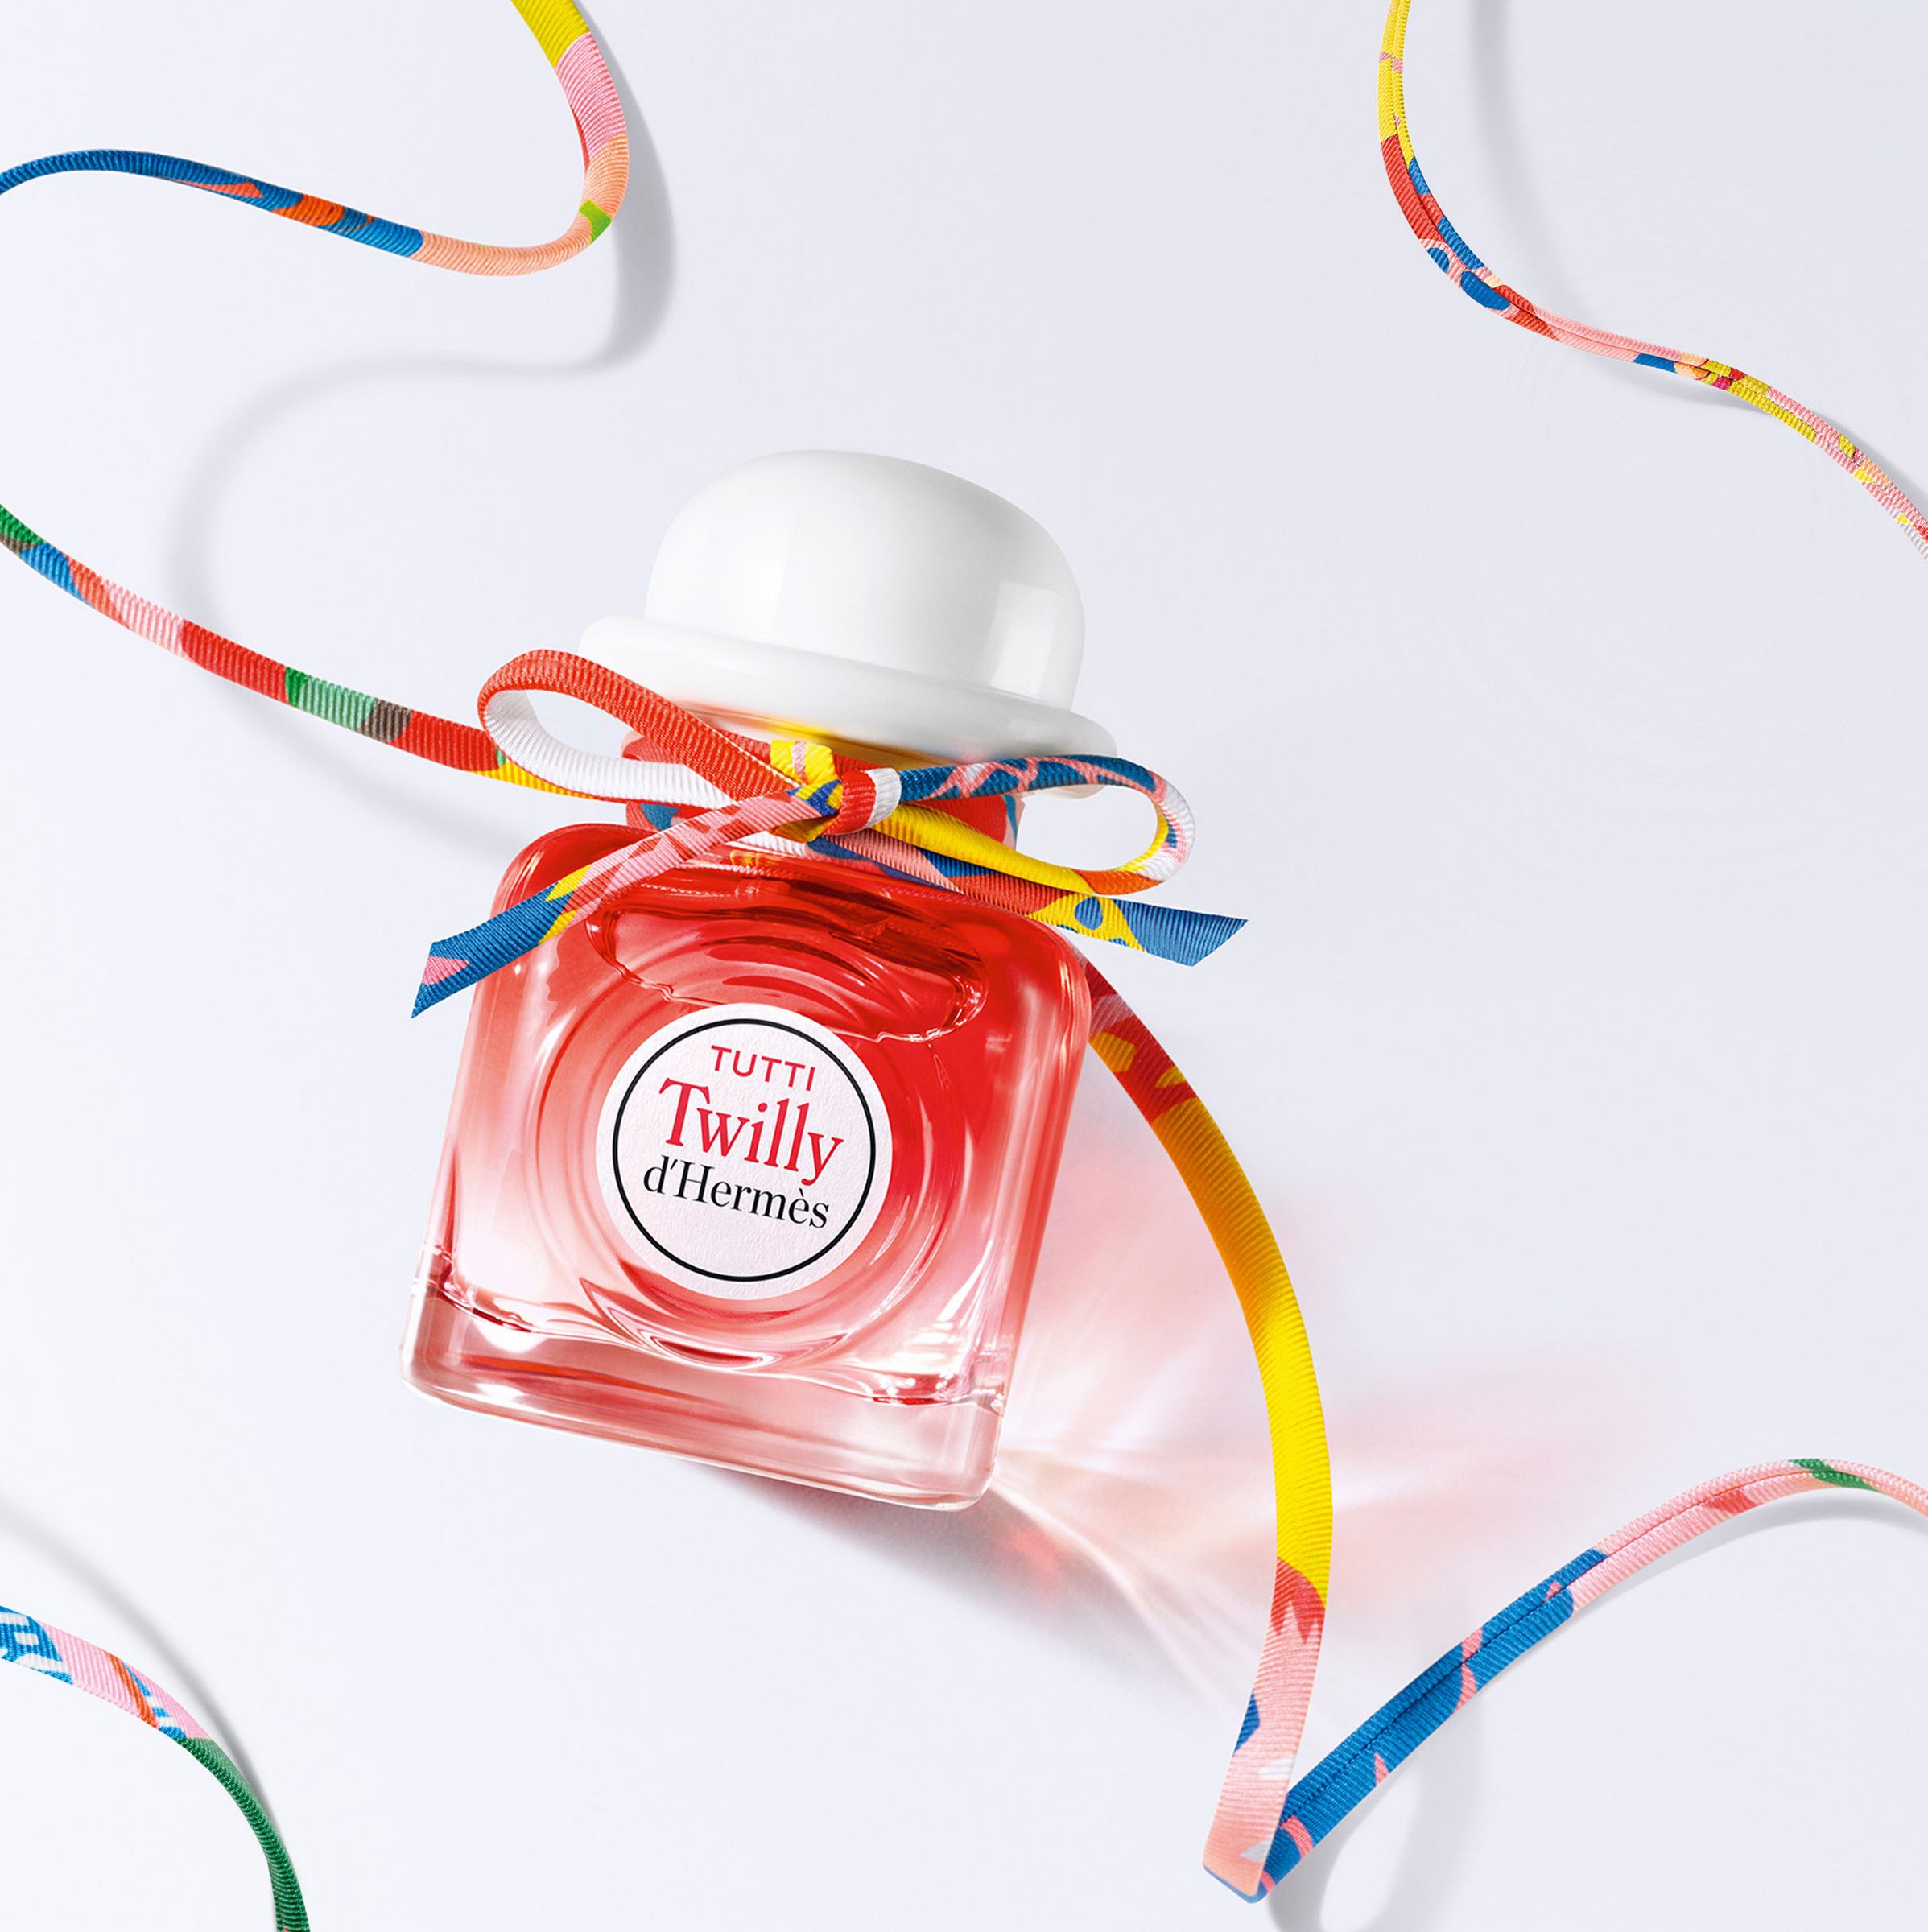 New from Hermès - Tutti Twilly Eau de Parfum